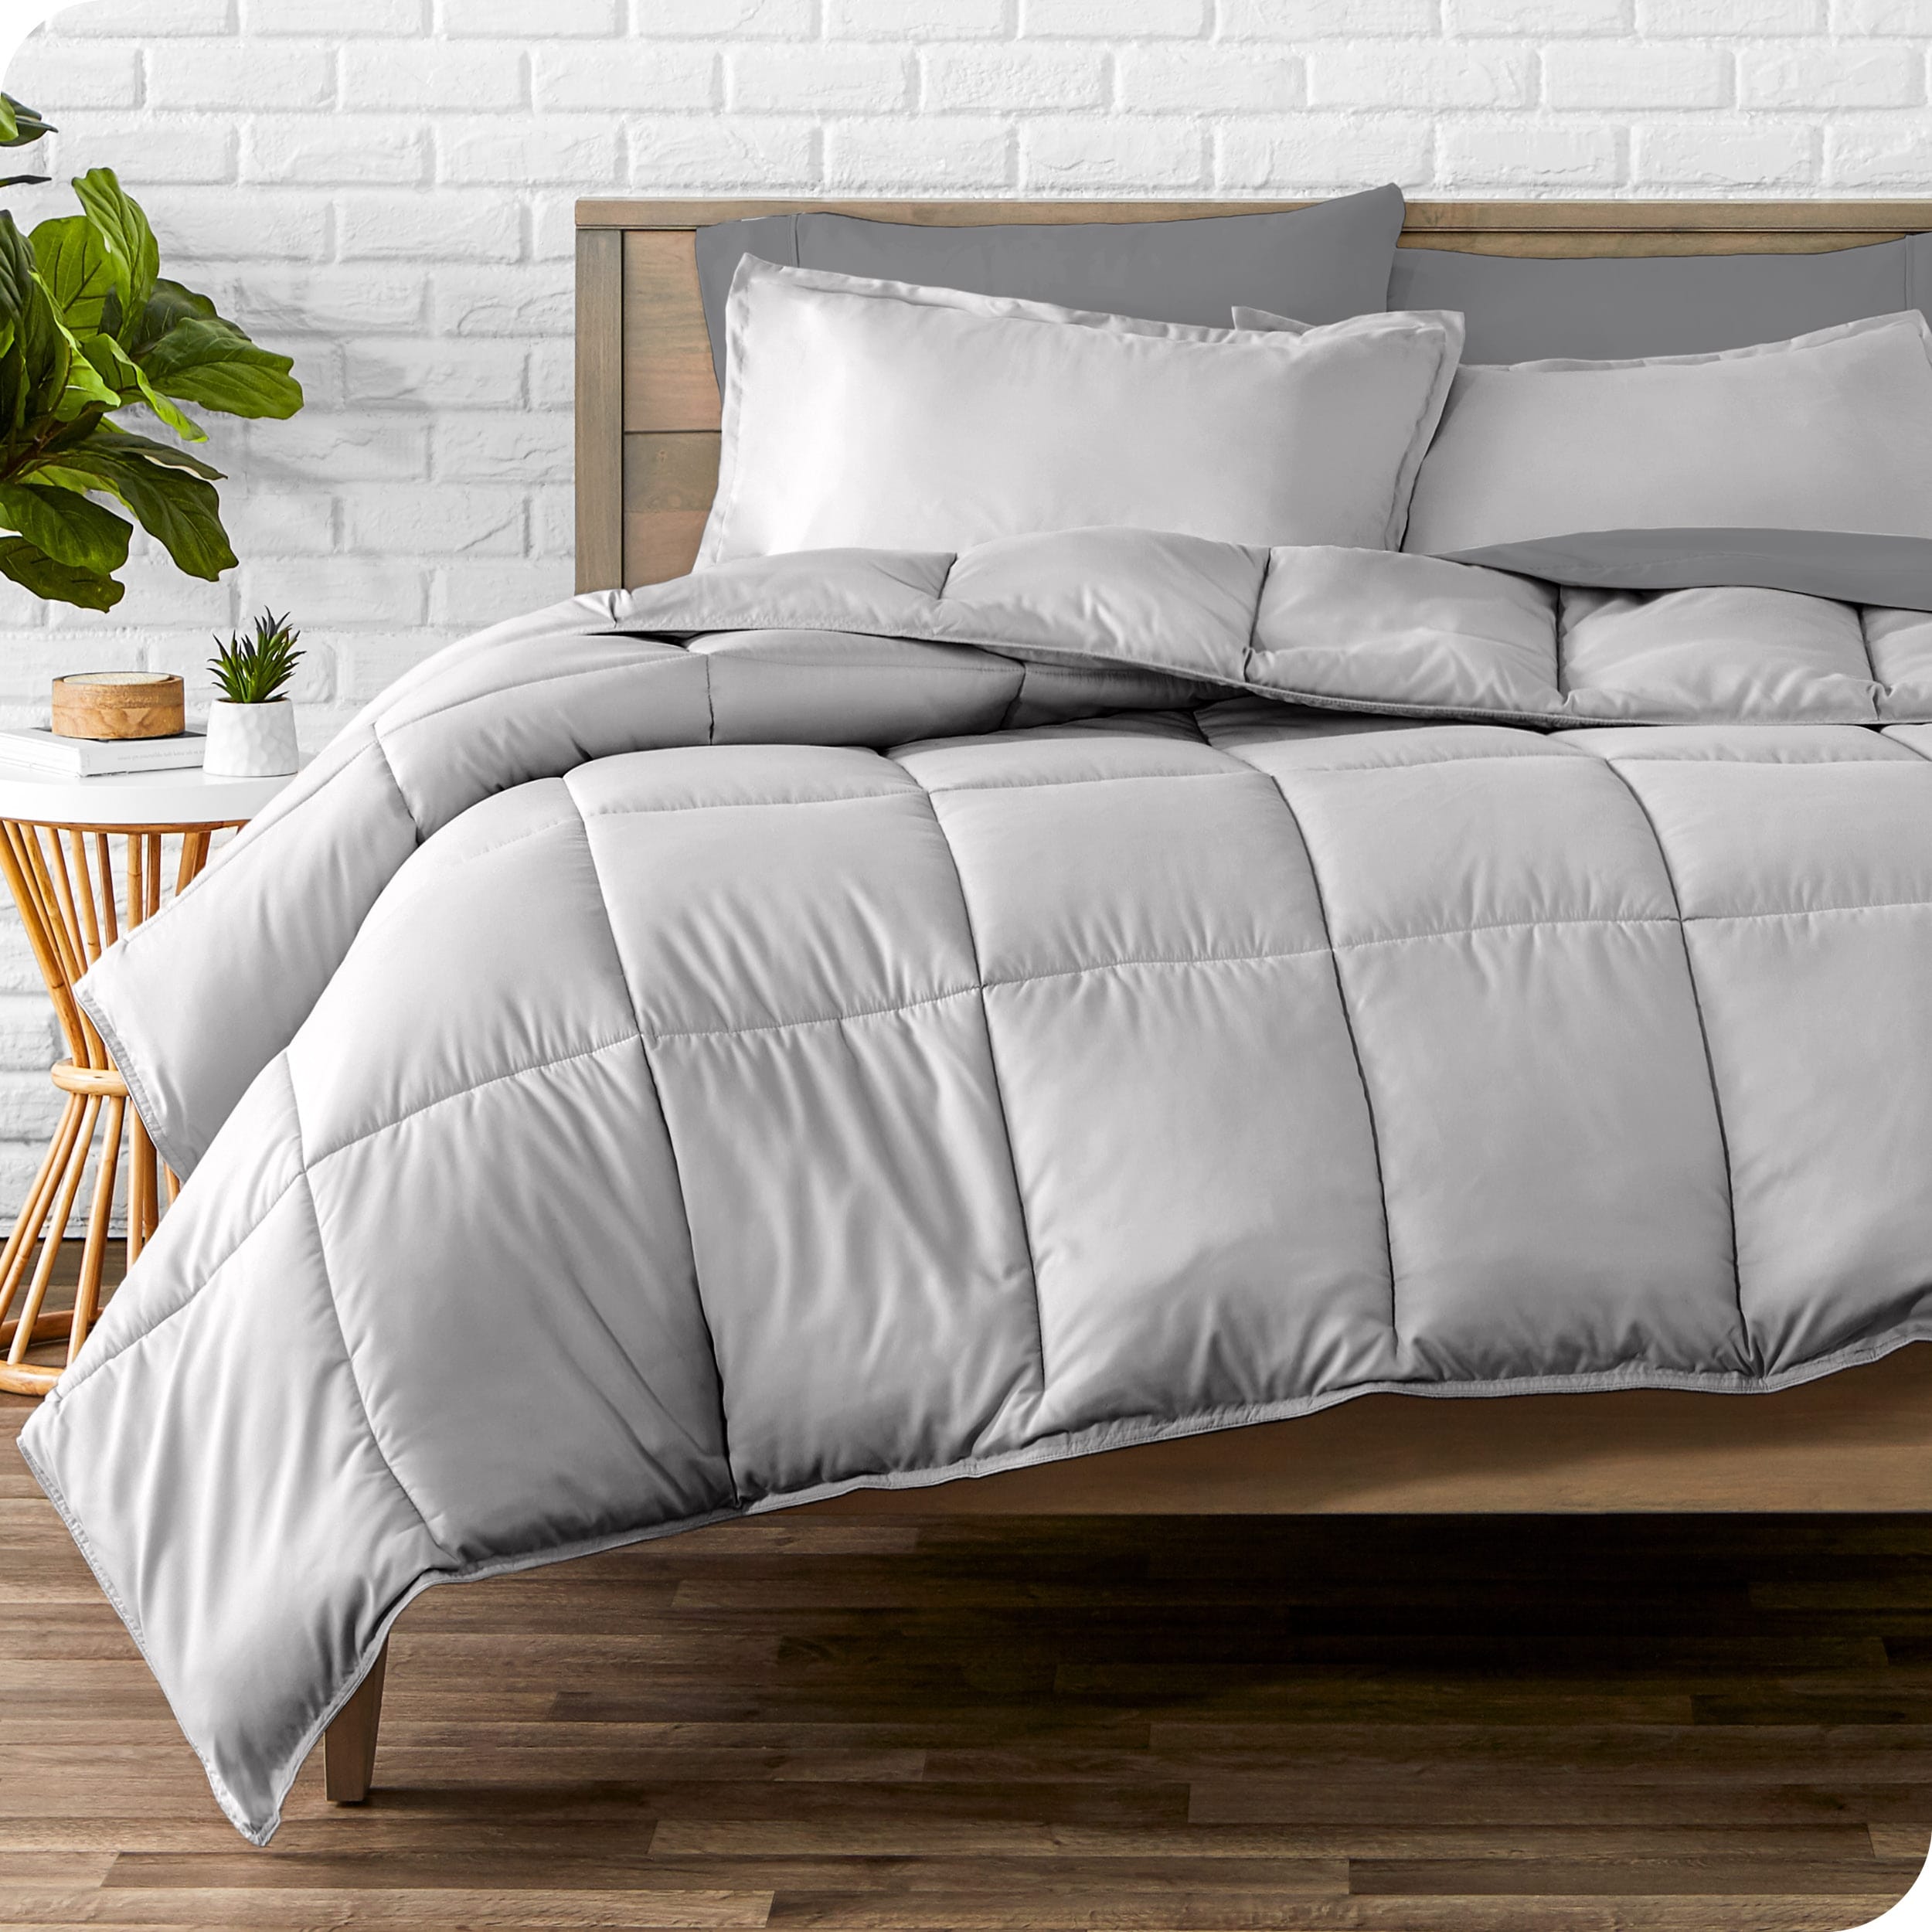 https://ak1.ostkcdn.com/images/products/is/images/direct/139dd31ff081ce3497cb5d0ca076e722a32fa74e/Bare-Home-Bed-in-a-Bag-Down-Alternative-Comforter-%26-Sheet-Set.jpg